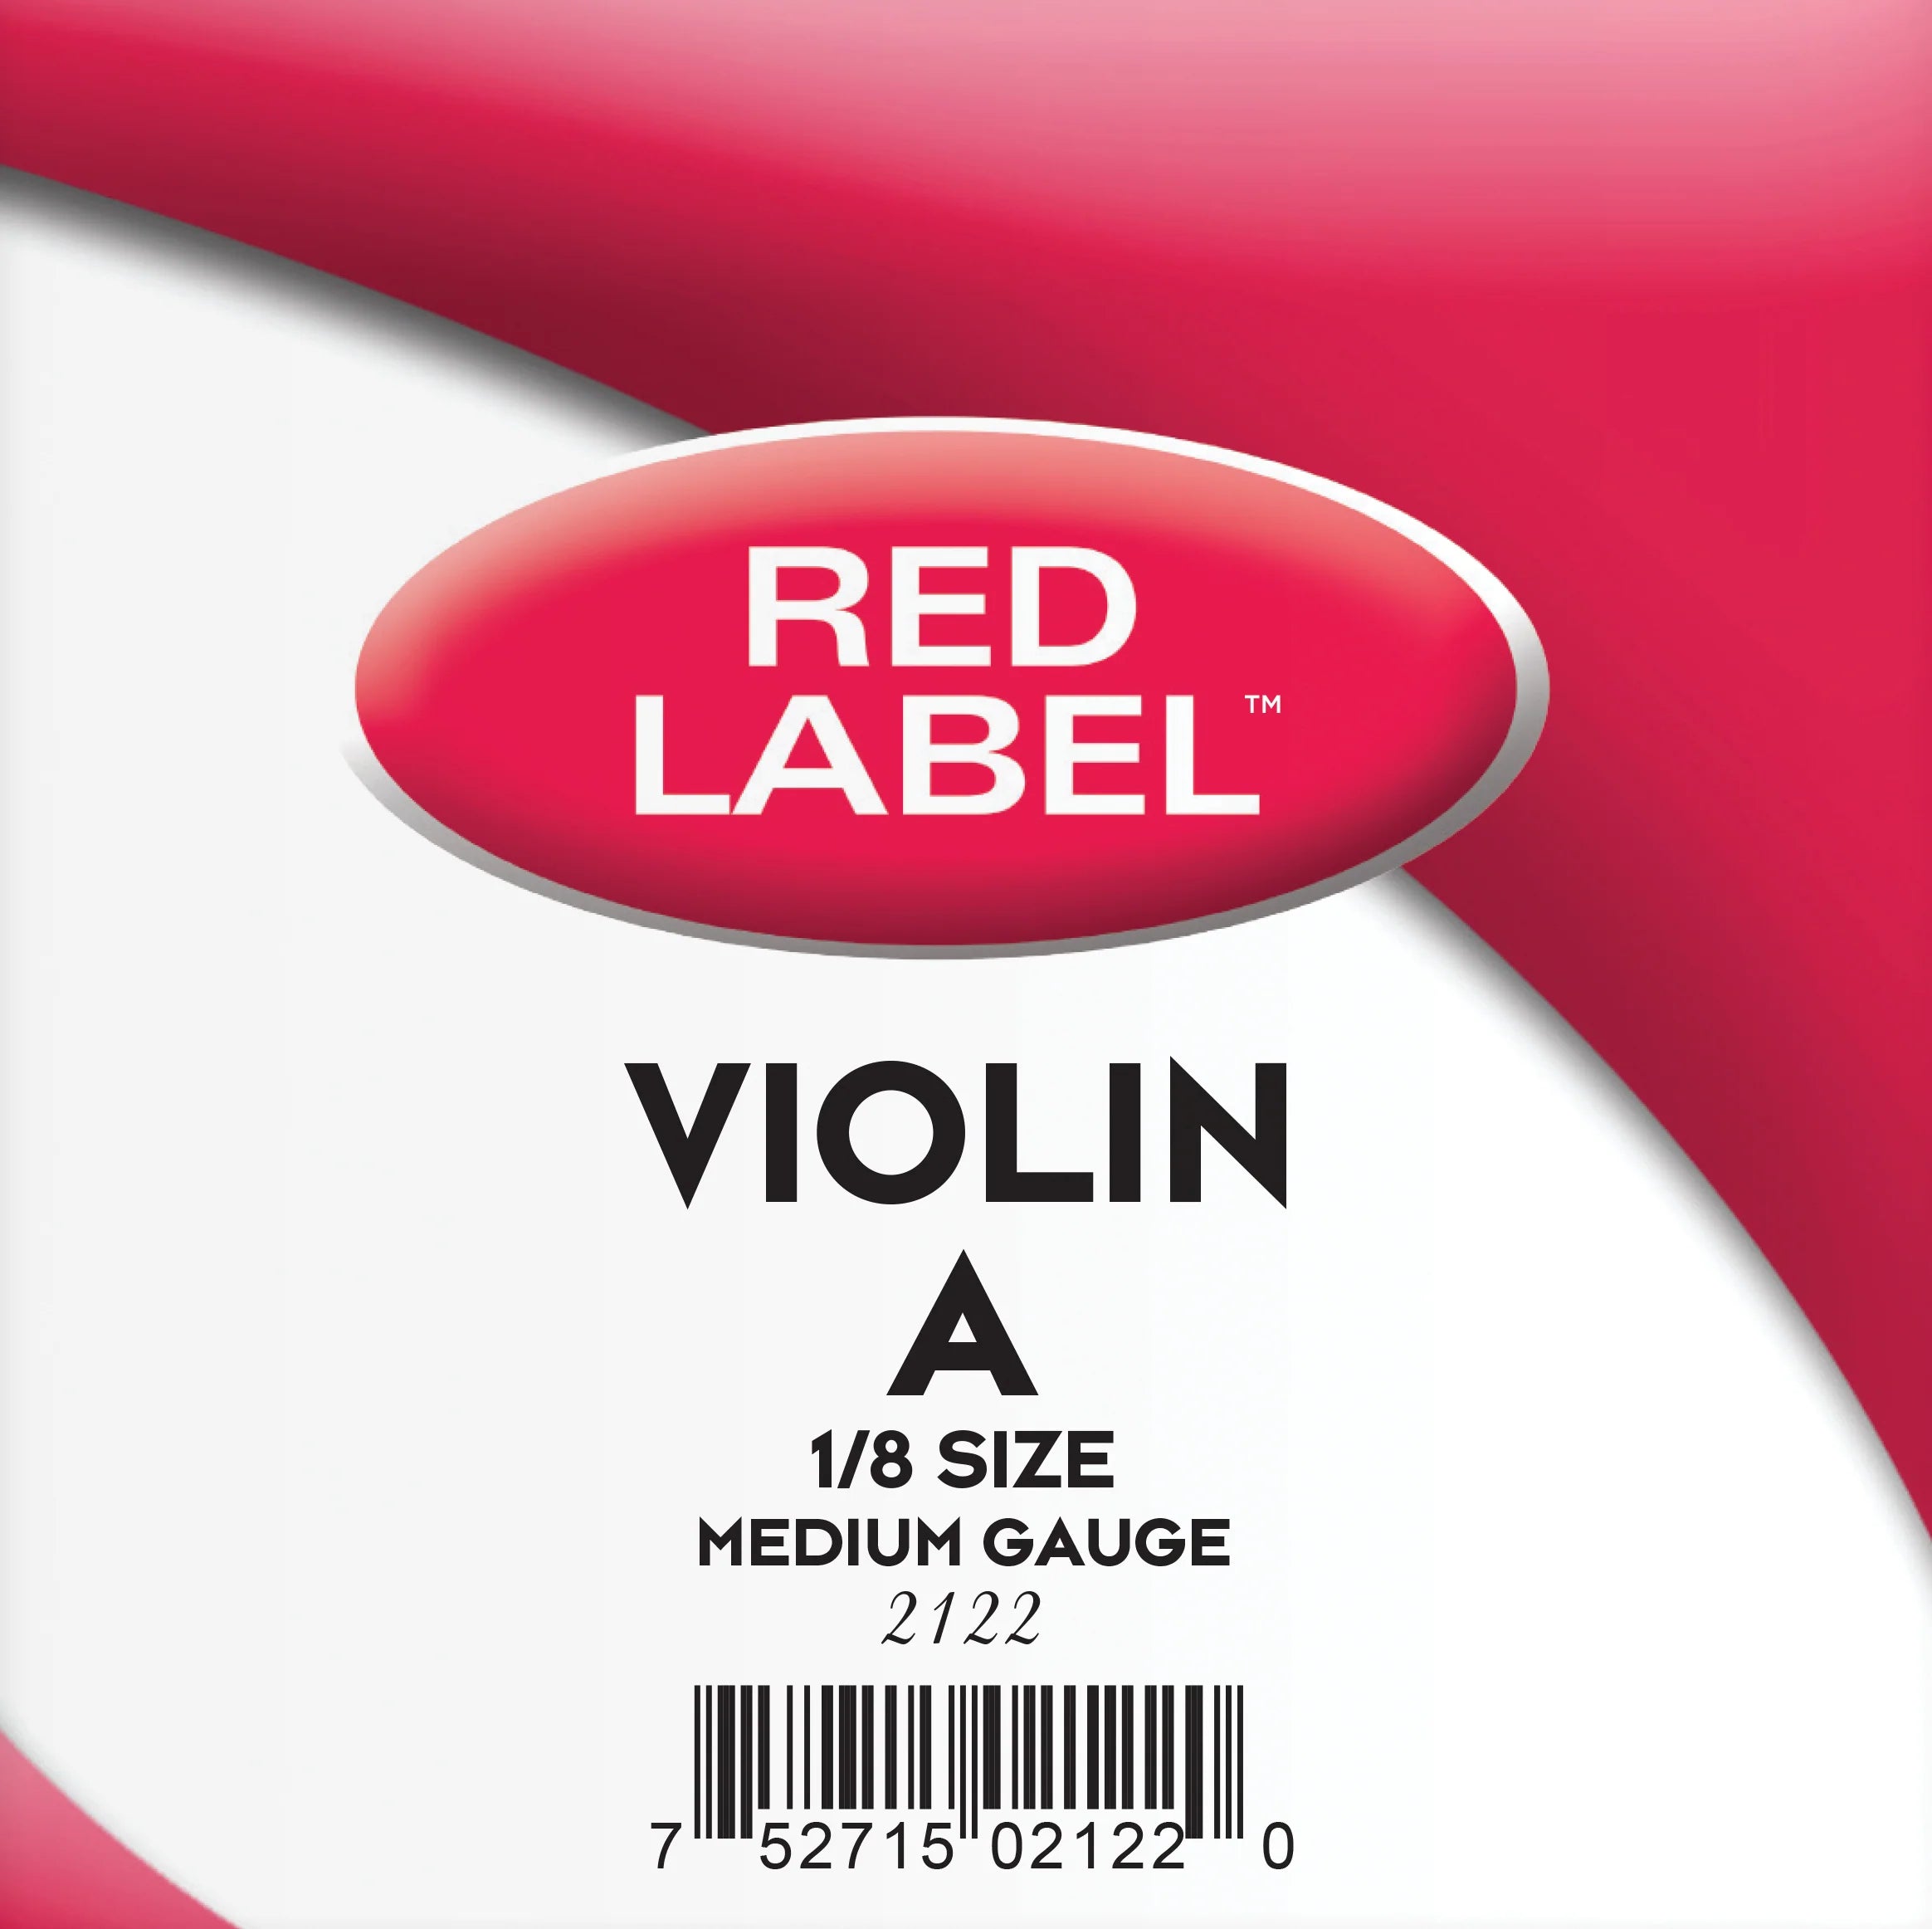 Red Label Violin Single String A 1/8